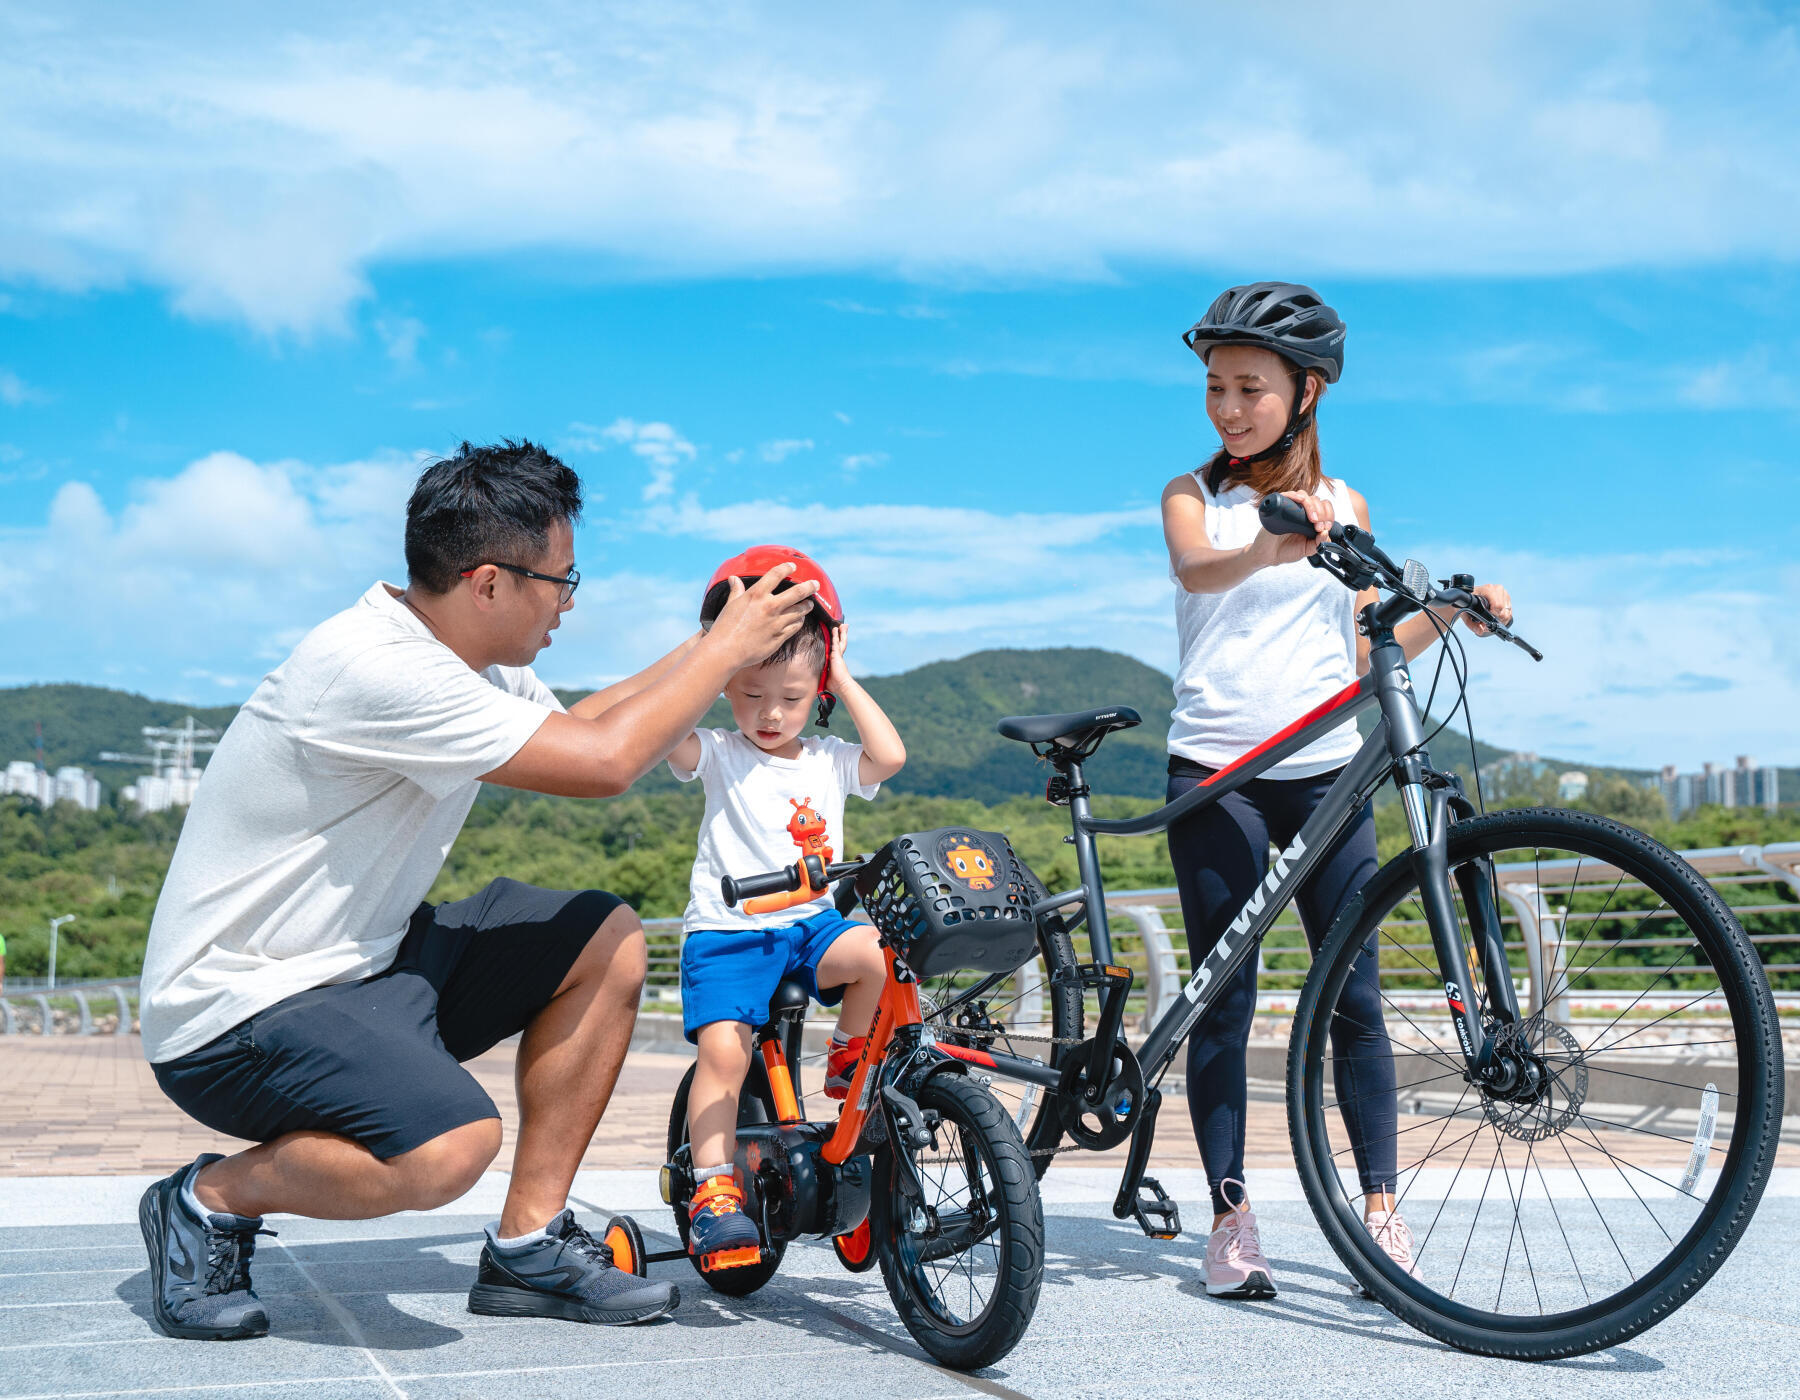 Biking with your kids